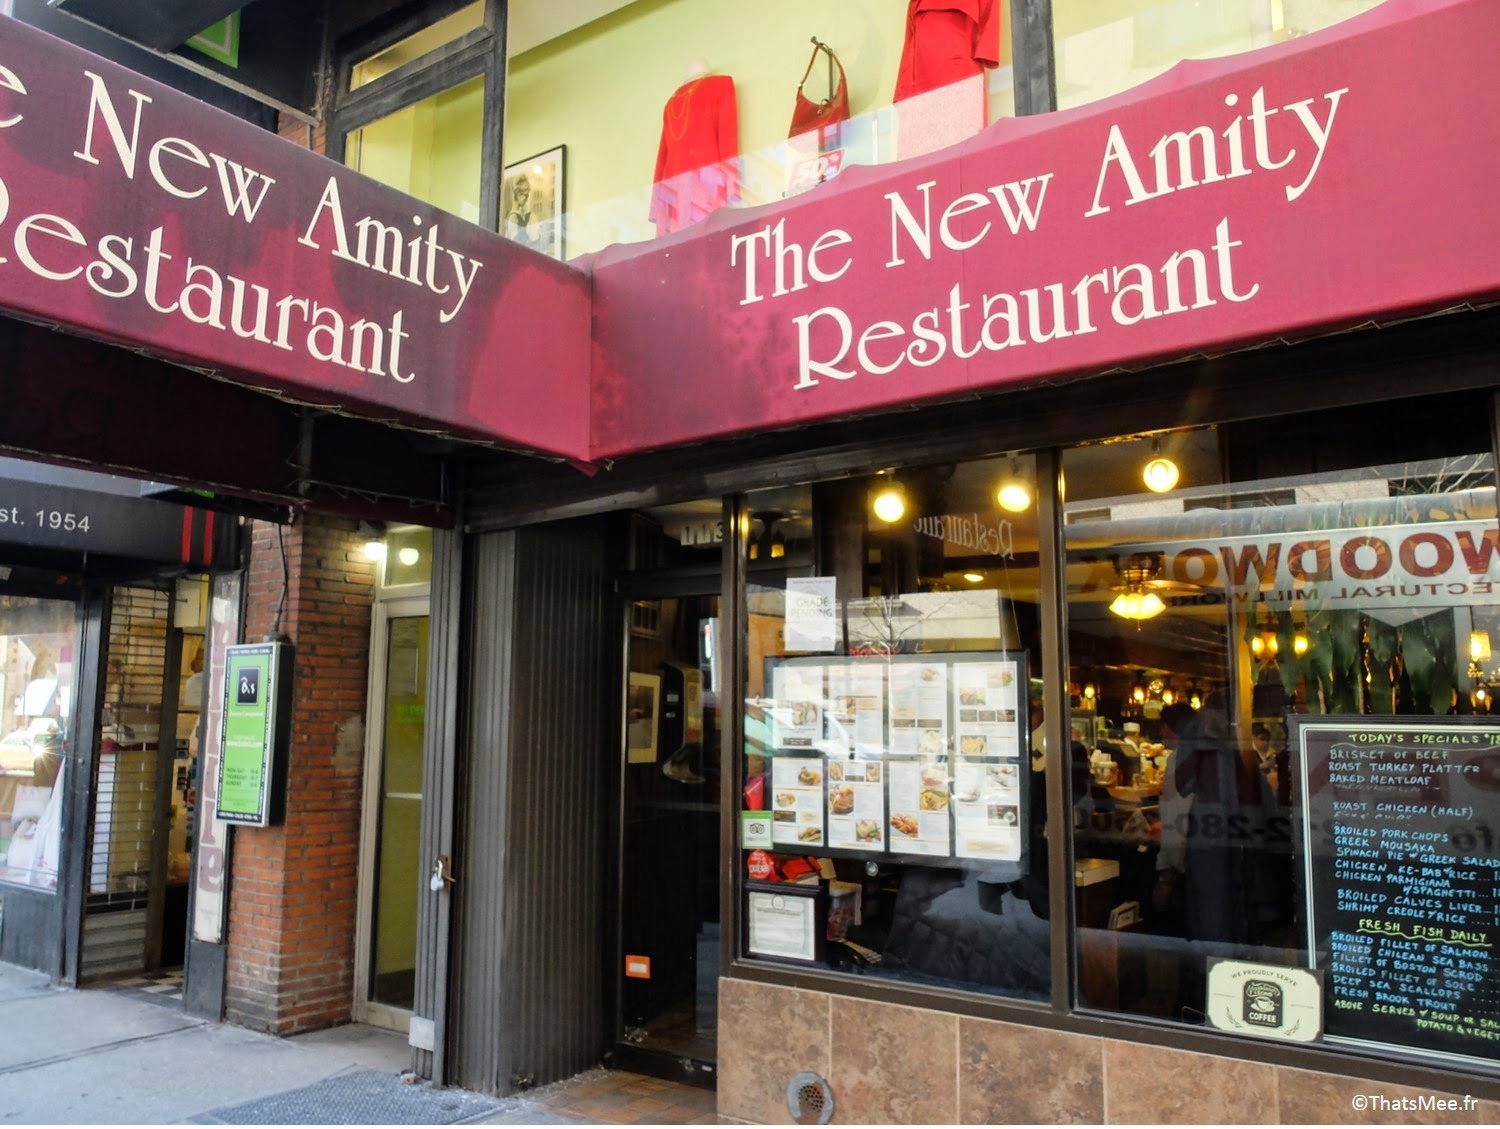 Resto Amity NYC Upper east side pastrami tardi juif